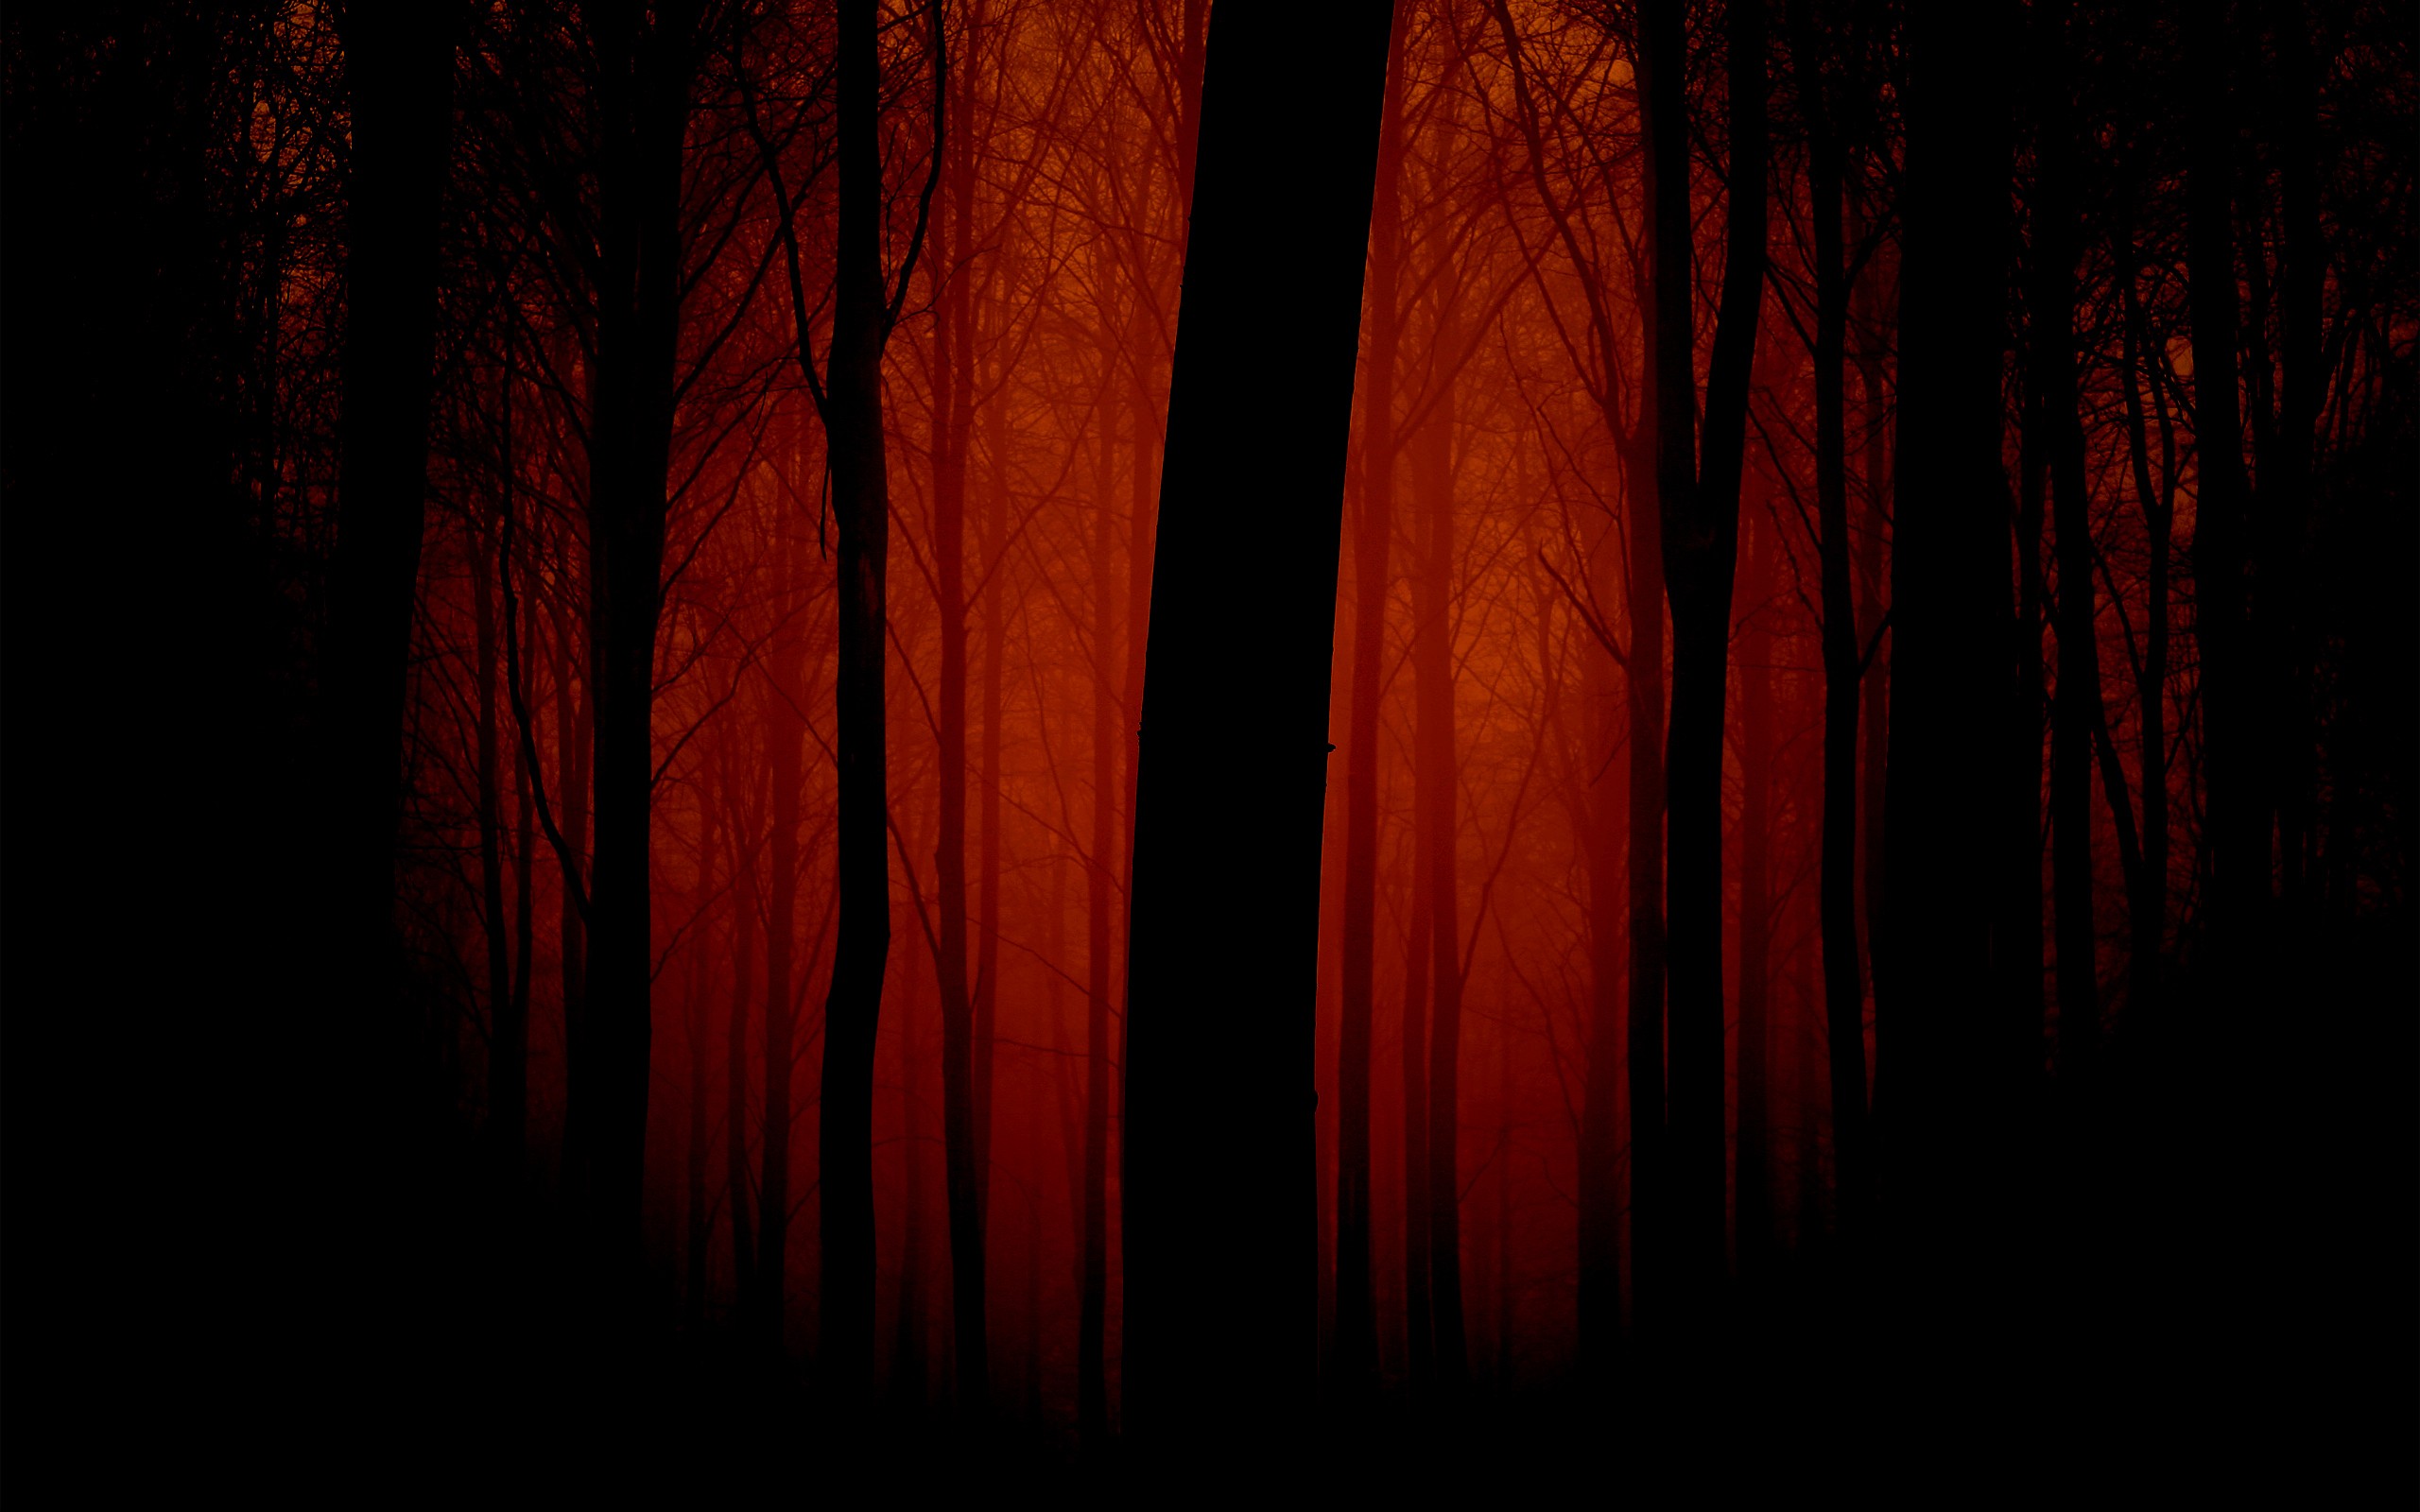 forests, silhouettes, monochrome - desktop wallpaper